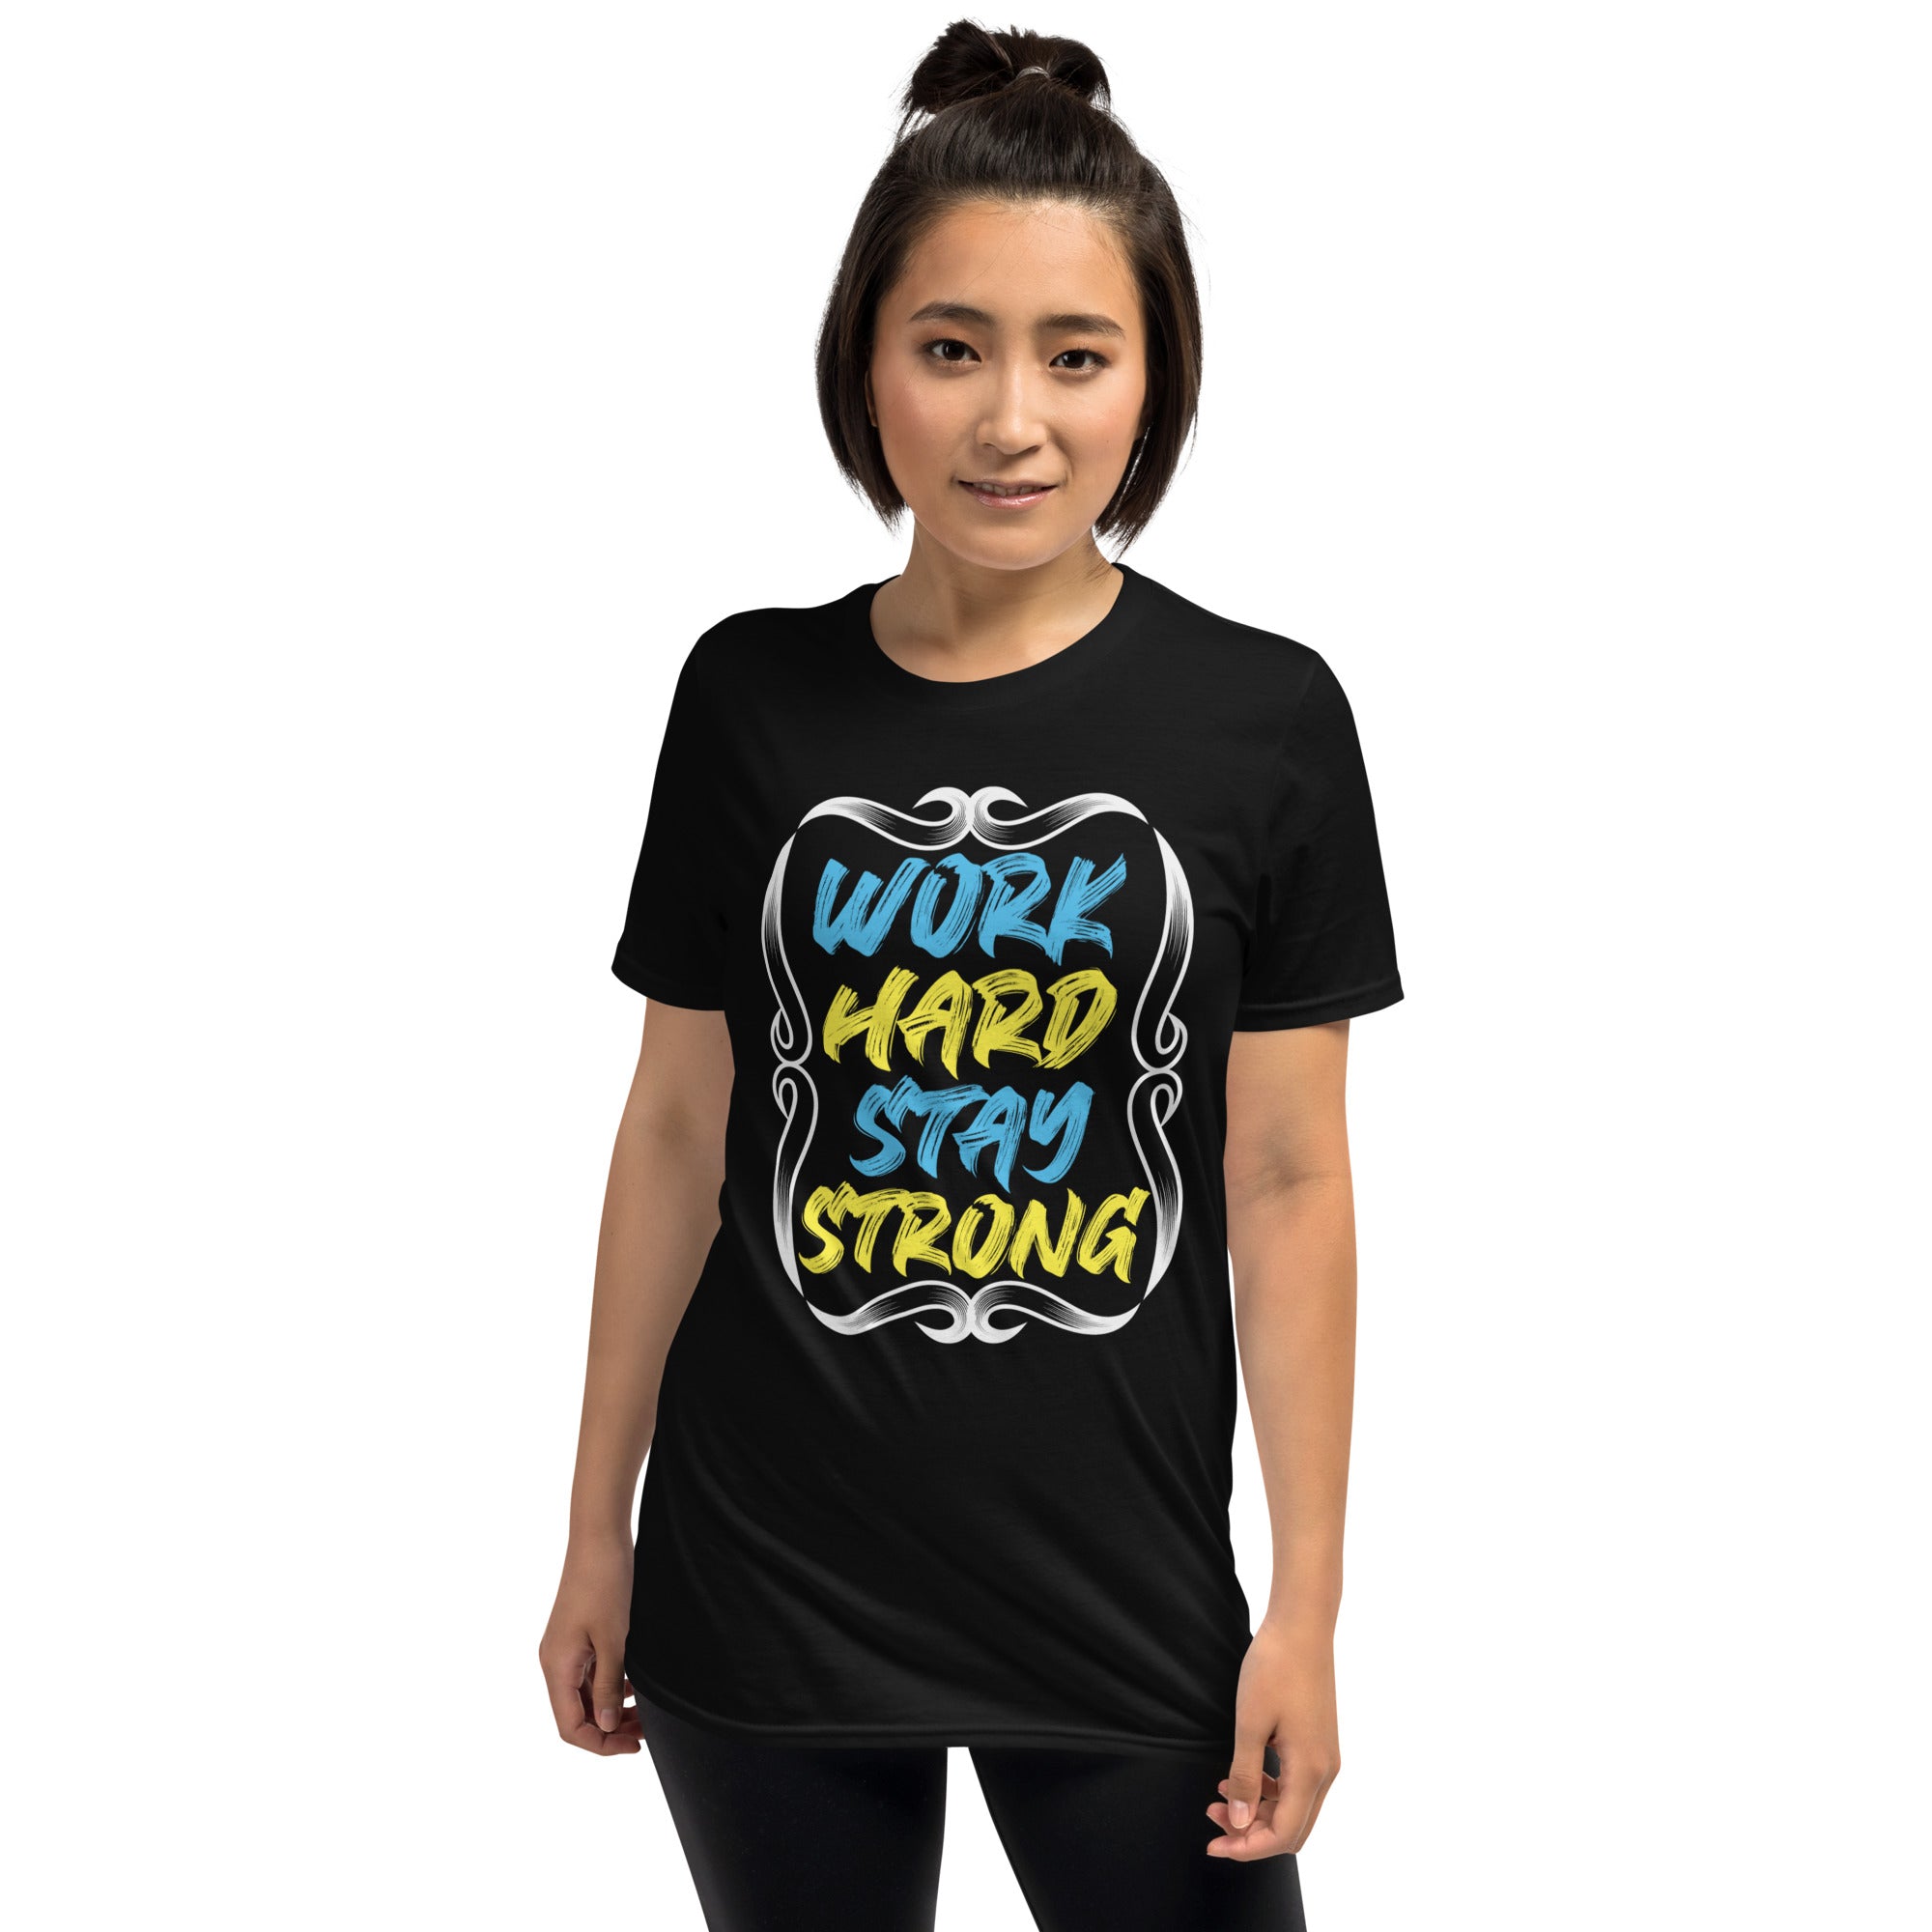 Work Hard Stay Strong - Short-Sleeve Unisex T-Shirt